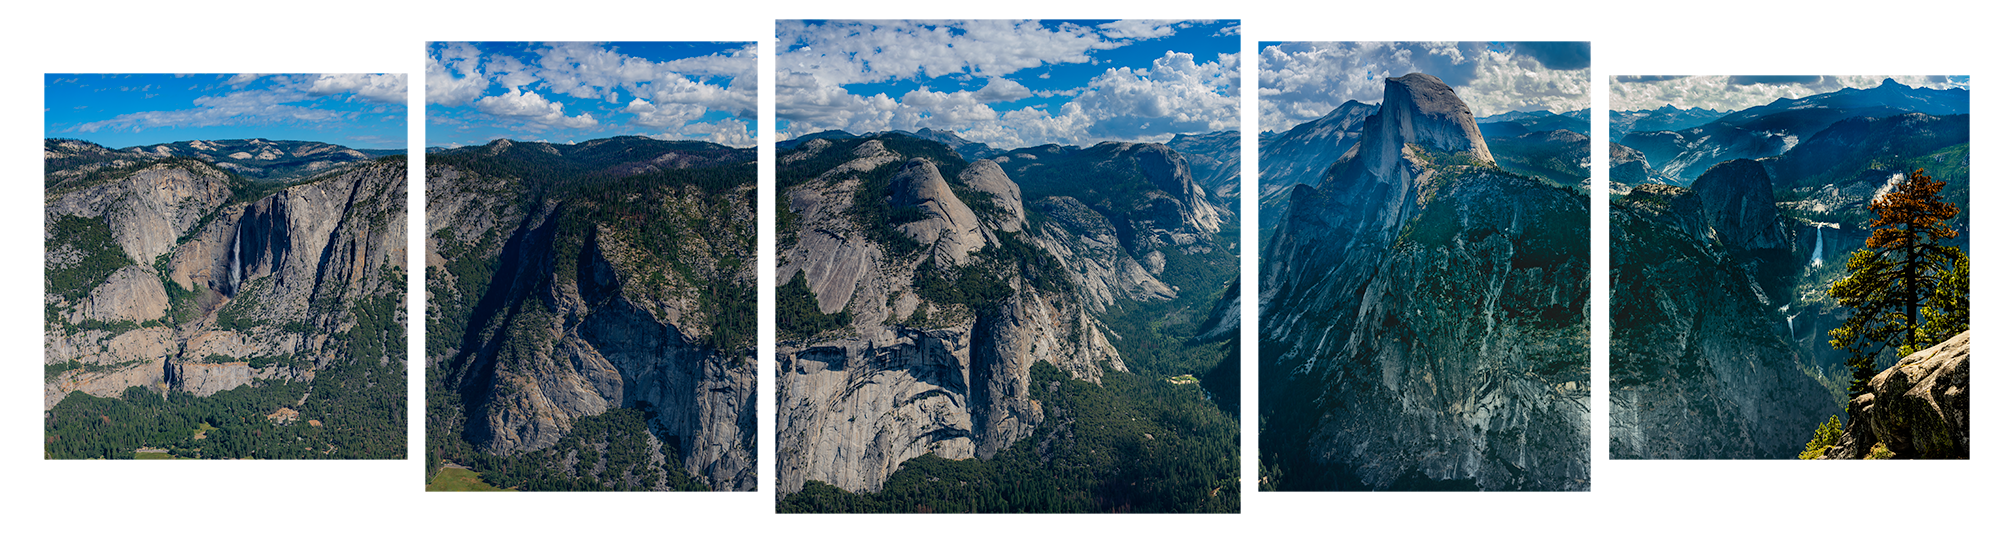 Yosemite valley 5 panel for web site o82dum